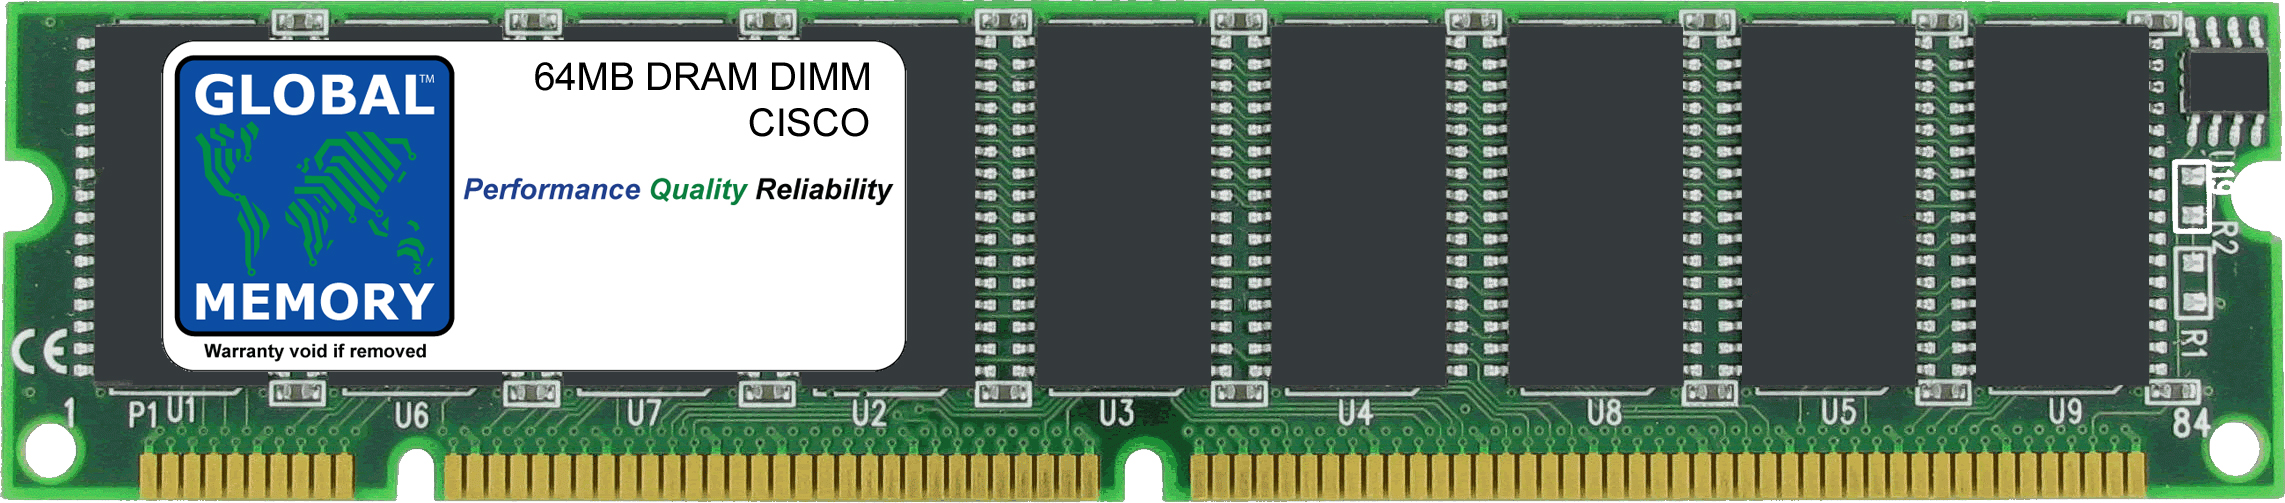 64MB DRAM DIMM MEMORY RAM FOR CISCO 7200 SERIES ROUTERS NPE-175 / 225 / 300 & NSE-1 / 1-7206 VXR (MEM-SD-NPE-64MB)